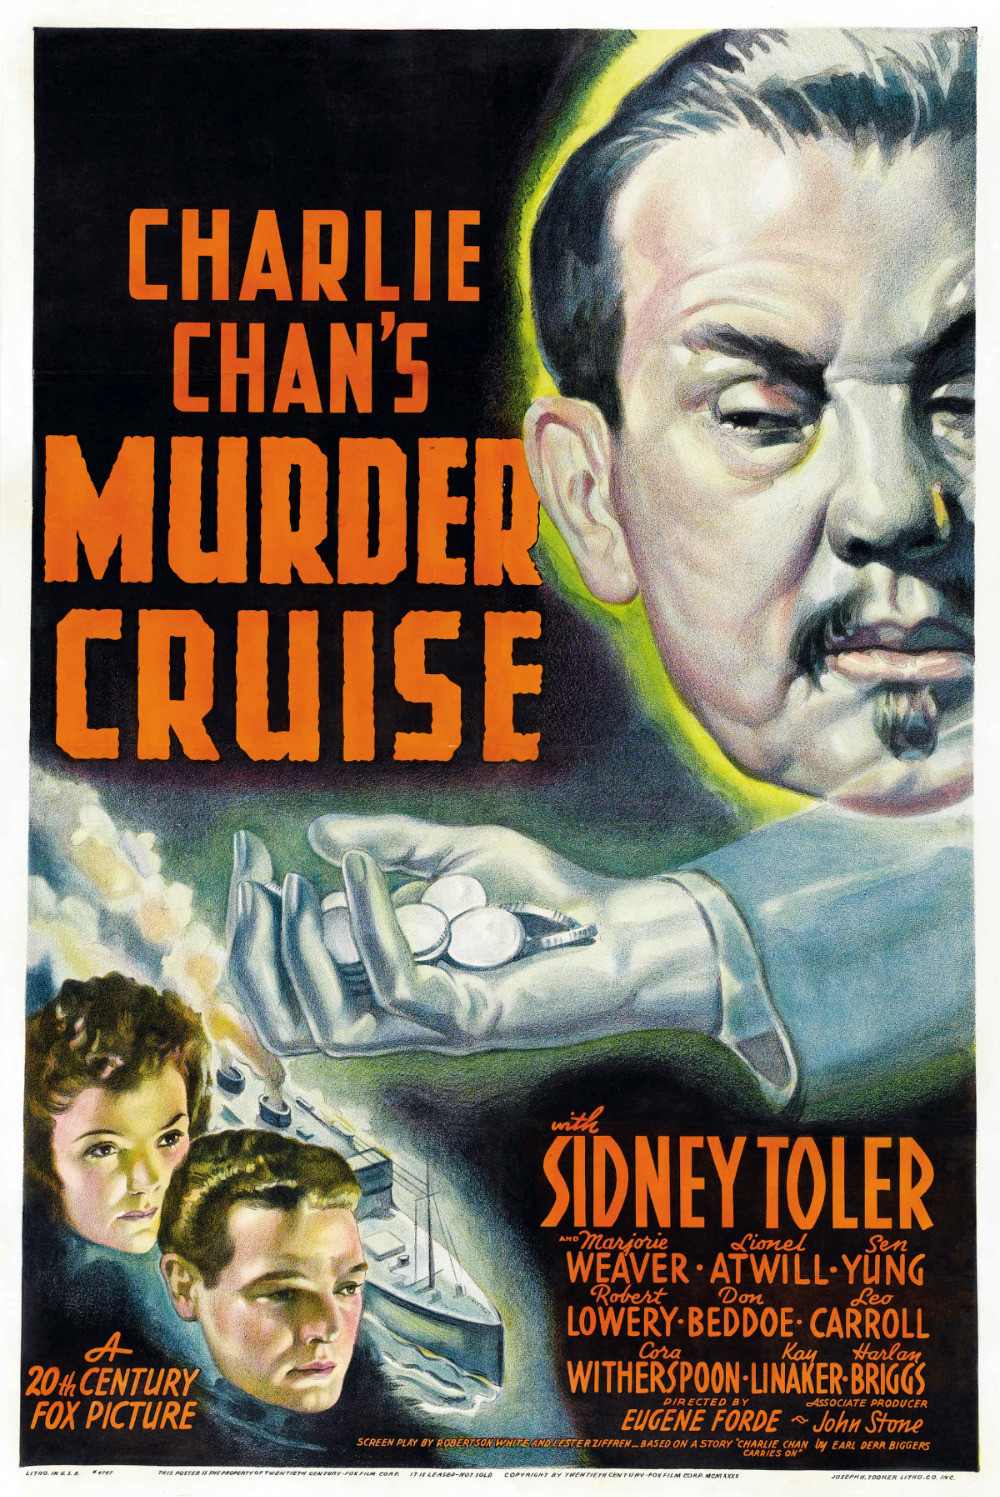 CHARLIE CHAN'S MURDER CRUISE (1940)